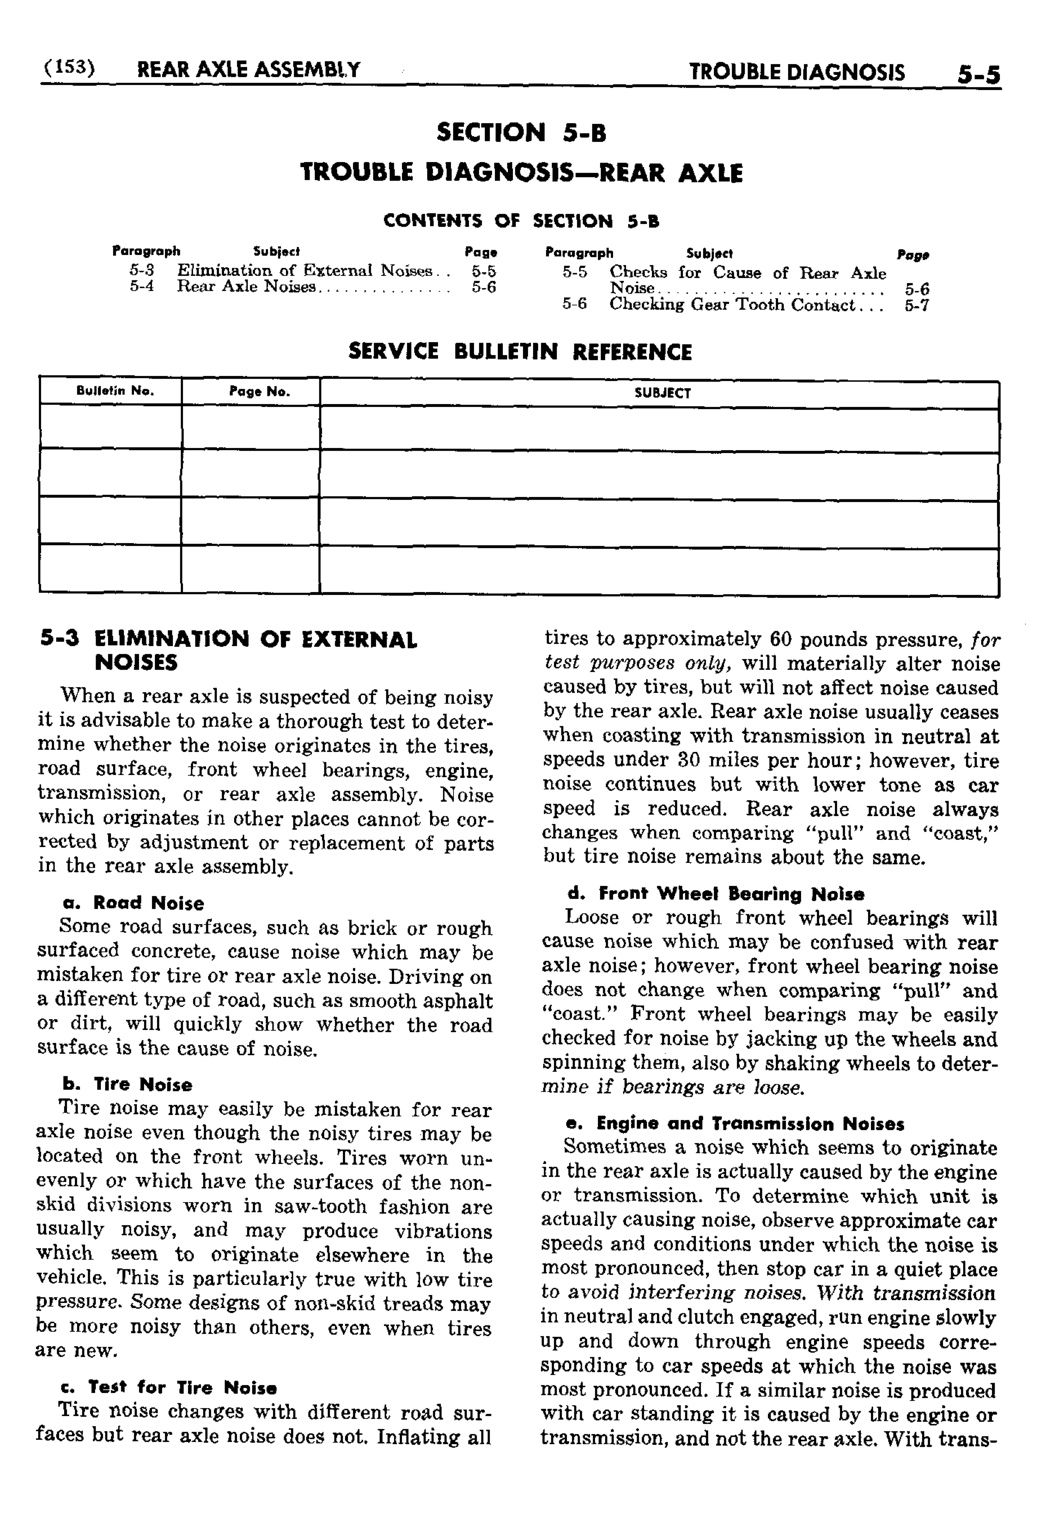 n_06 1950 Buick Shop Manual - Rear Axle-005-005.jpg